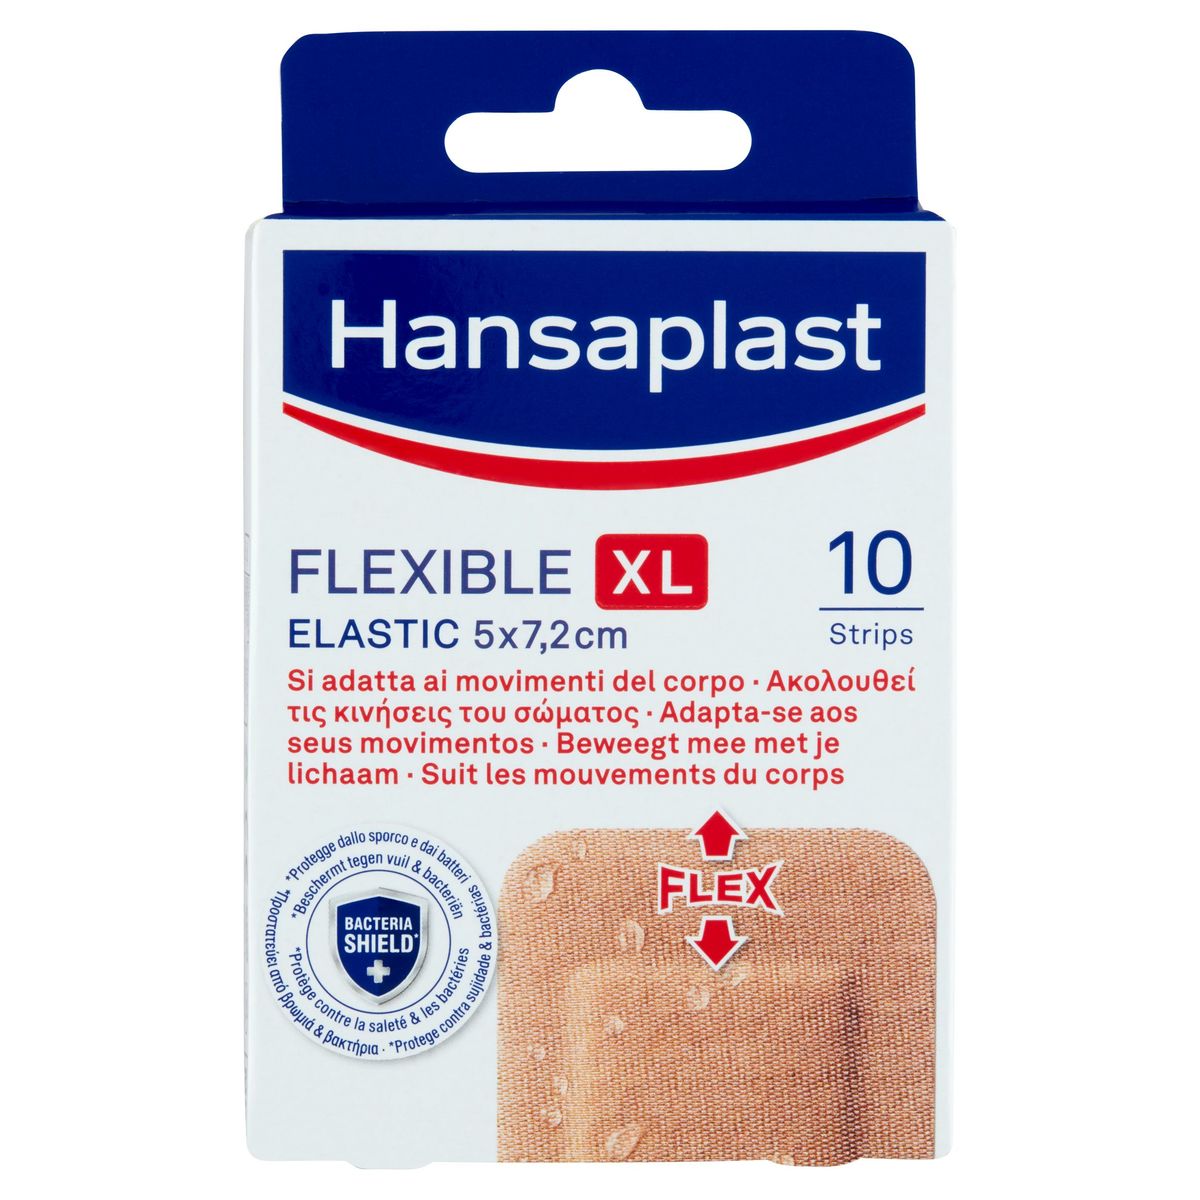 Hansaplast Flexible XL Elastic 10 Strips